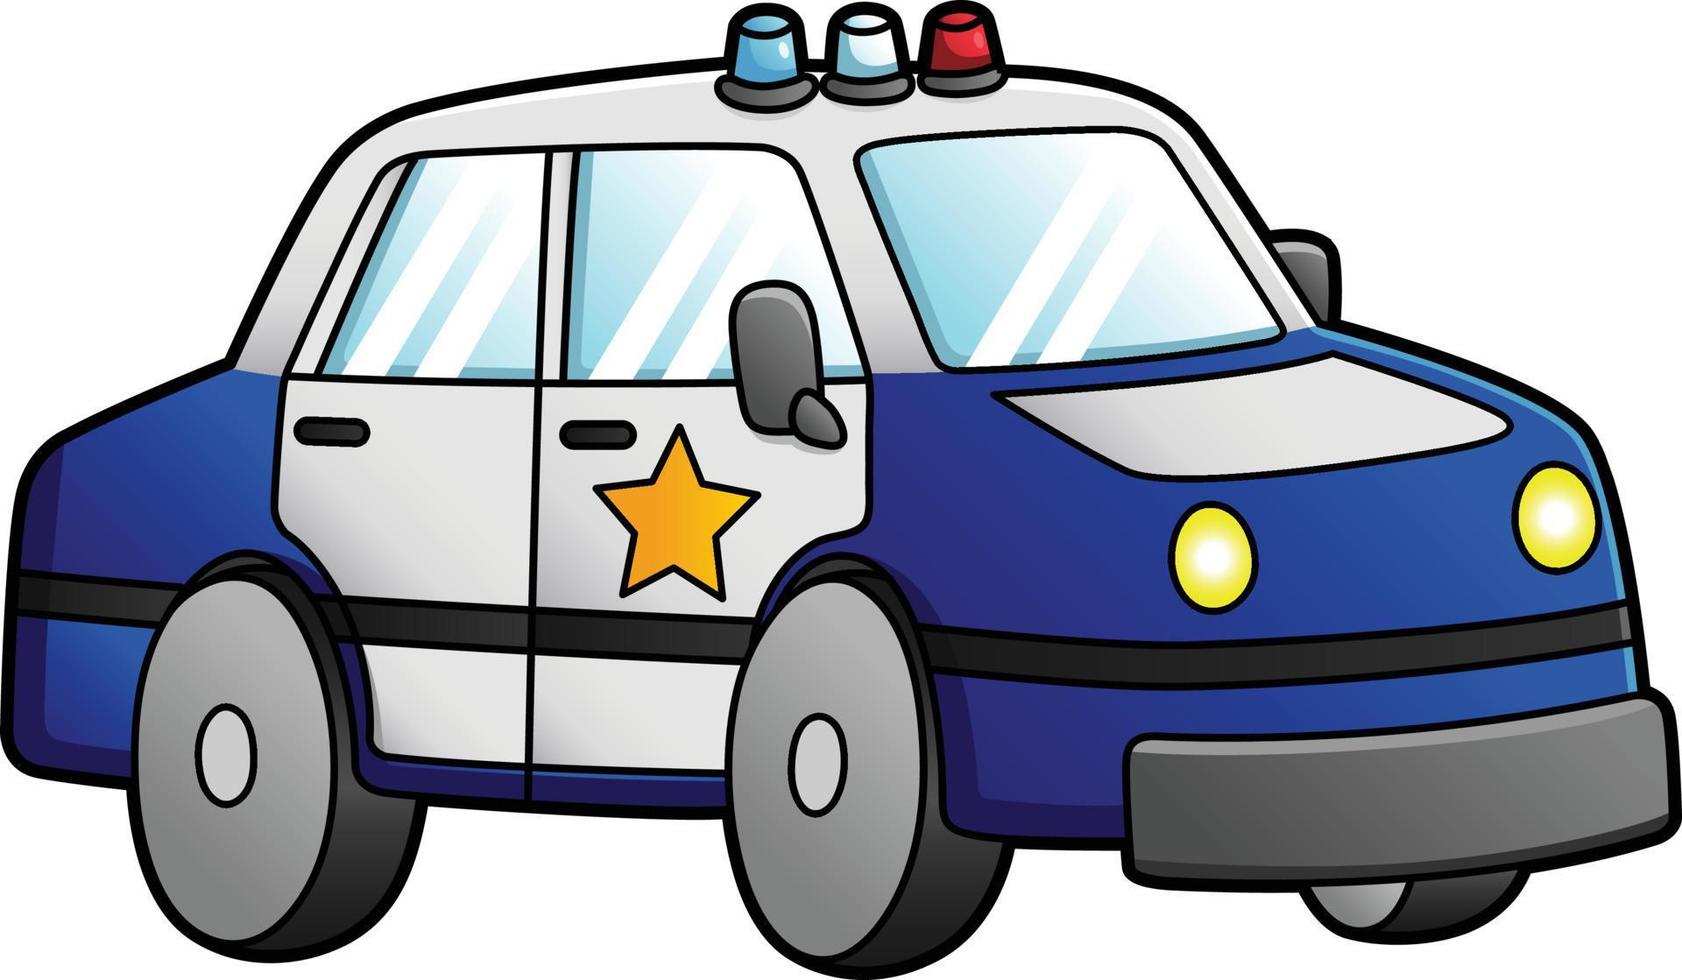 coche de policía dibujos animados clipart color ilustración 6458272 Vector  en Vecteezy